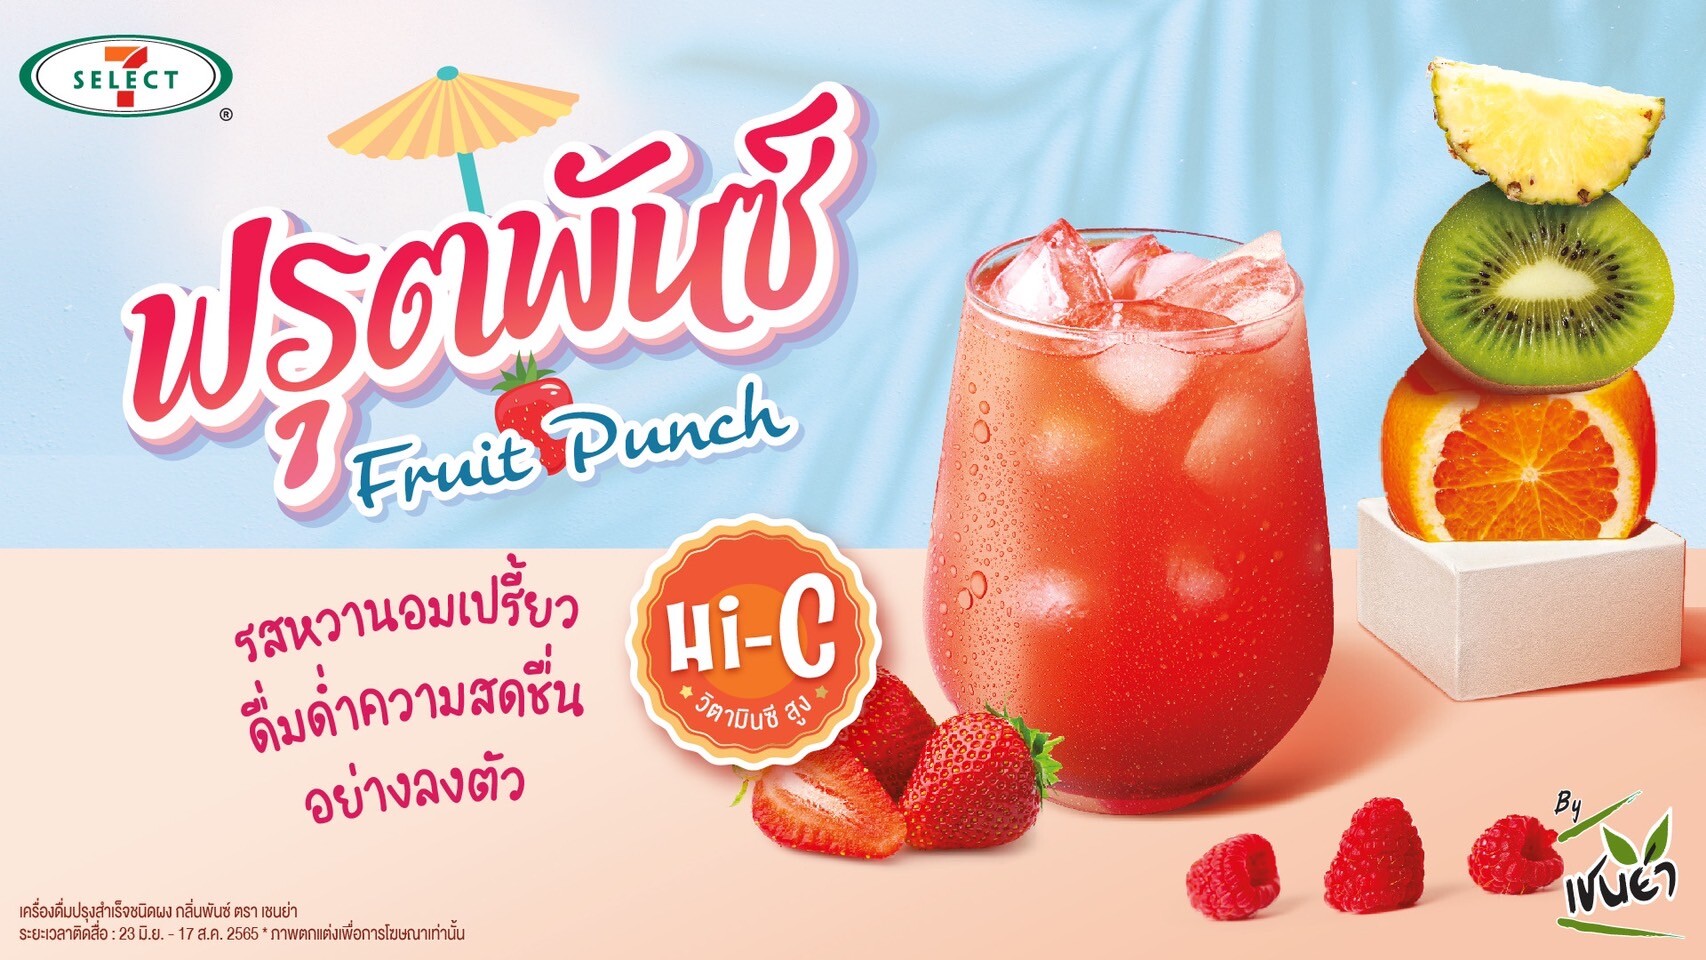 TACC รุกตลาด Health & Wellness ต่อเนื่องจับกลุ่มคนรักสุขภาพ เสิร์ฟเครื่องดื่มเพื่อสุขภาพ Fruit Punch Hi-C ลงโถกดเซเว่นฯ